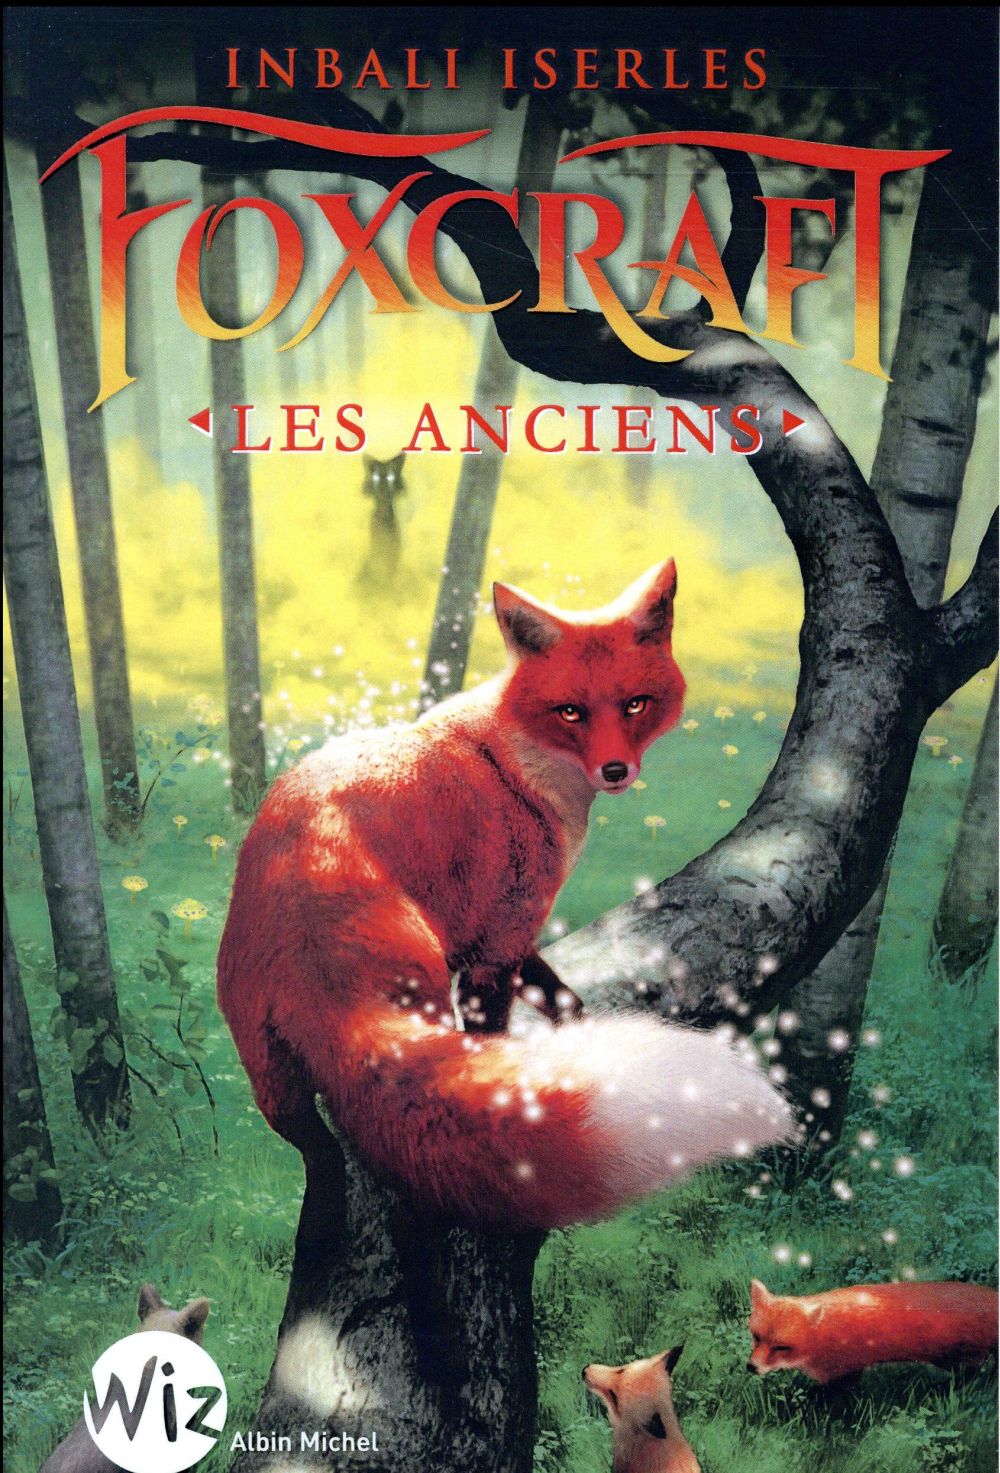 FOXCRAFT - TOME 2 - LES ANCIENS